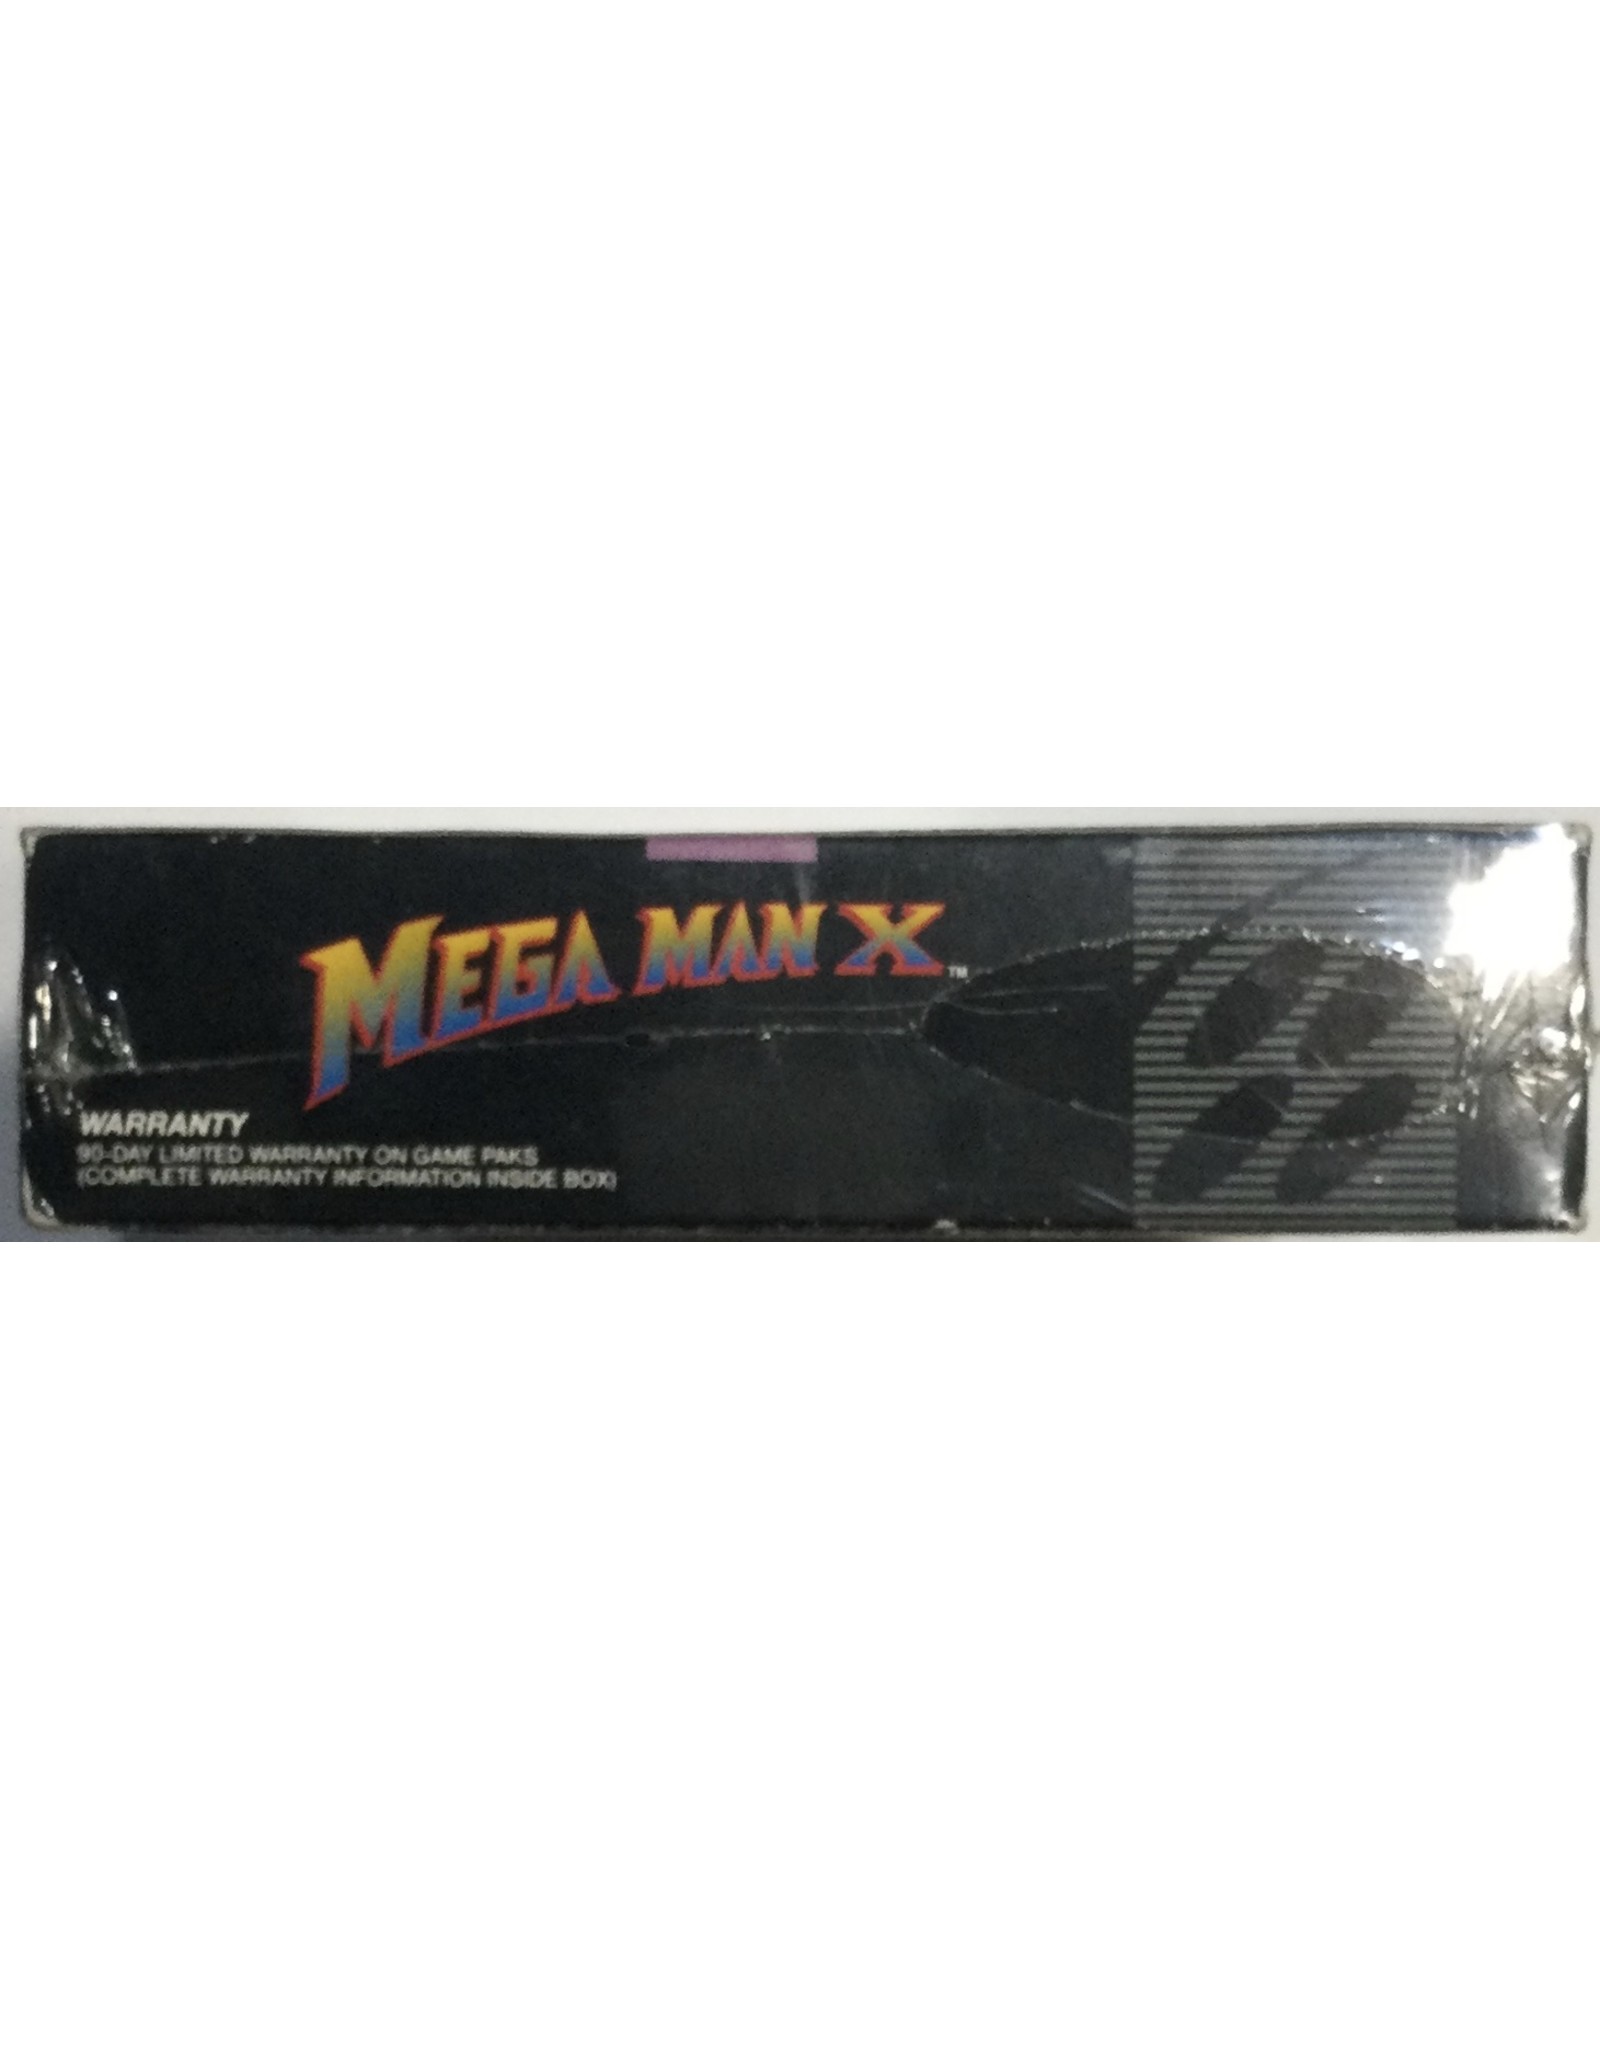 CAPCOM Mega Man X for Super Nintendo Entertainment System (SNES) - NIB